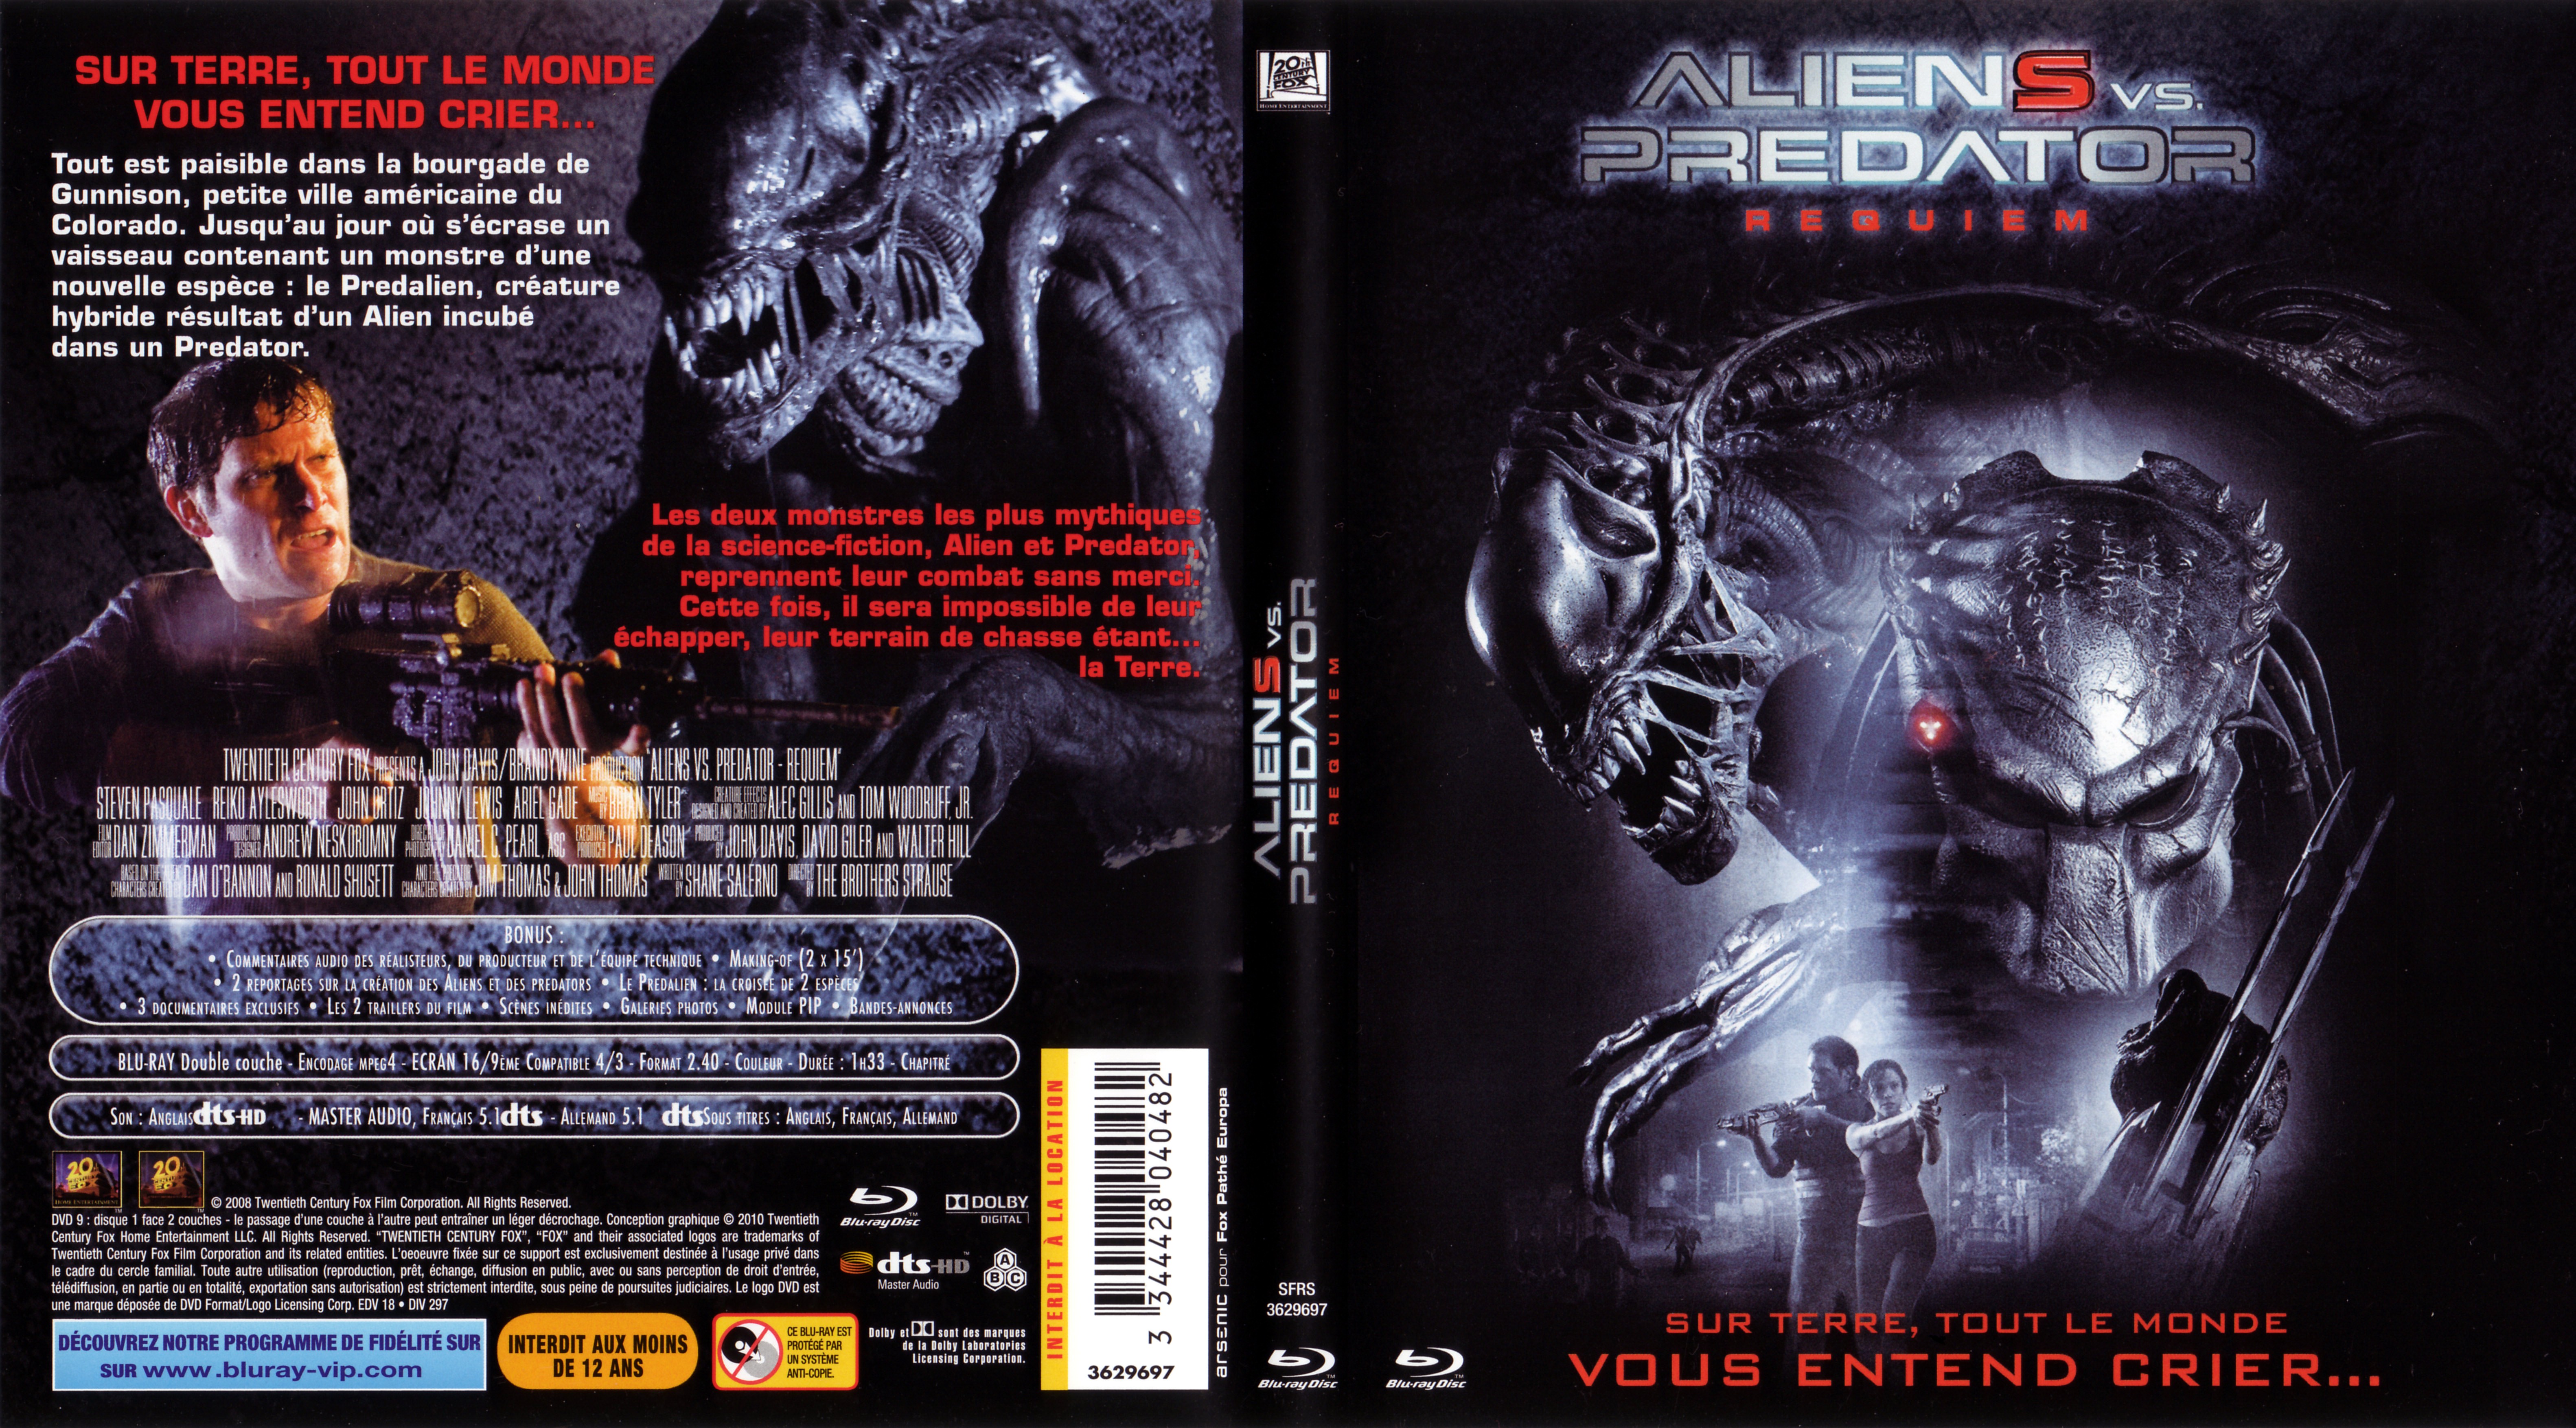 Jaquette DVD Aliens VS Predator requiem (BLU-RAY) v3